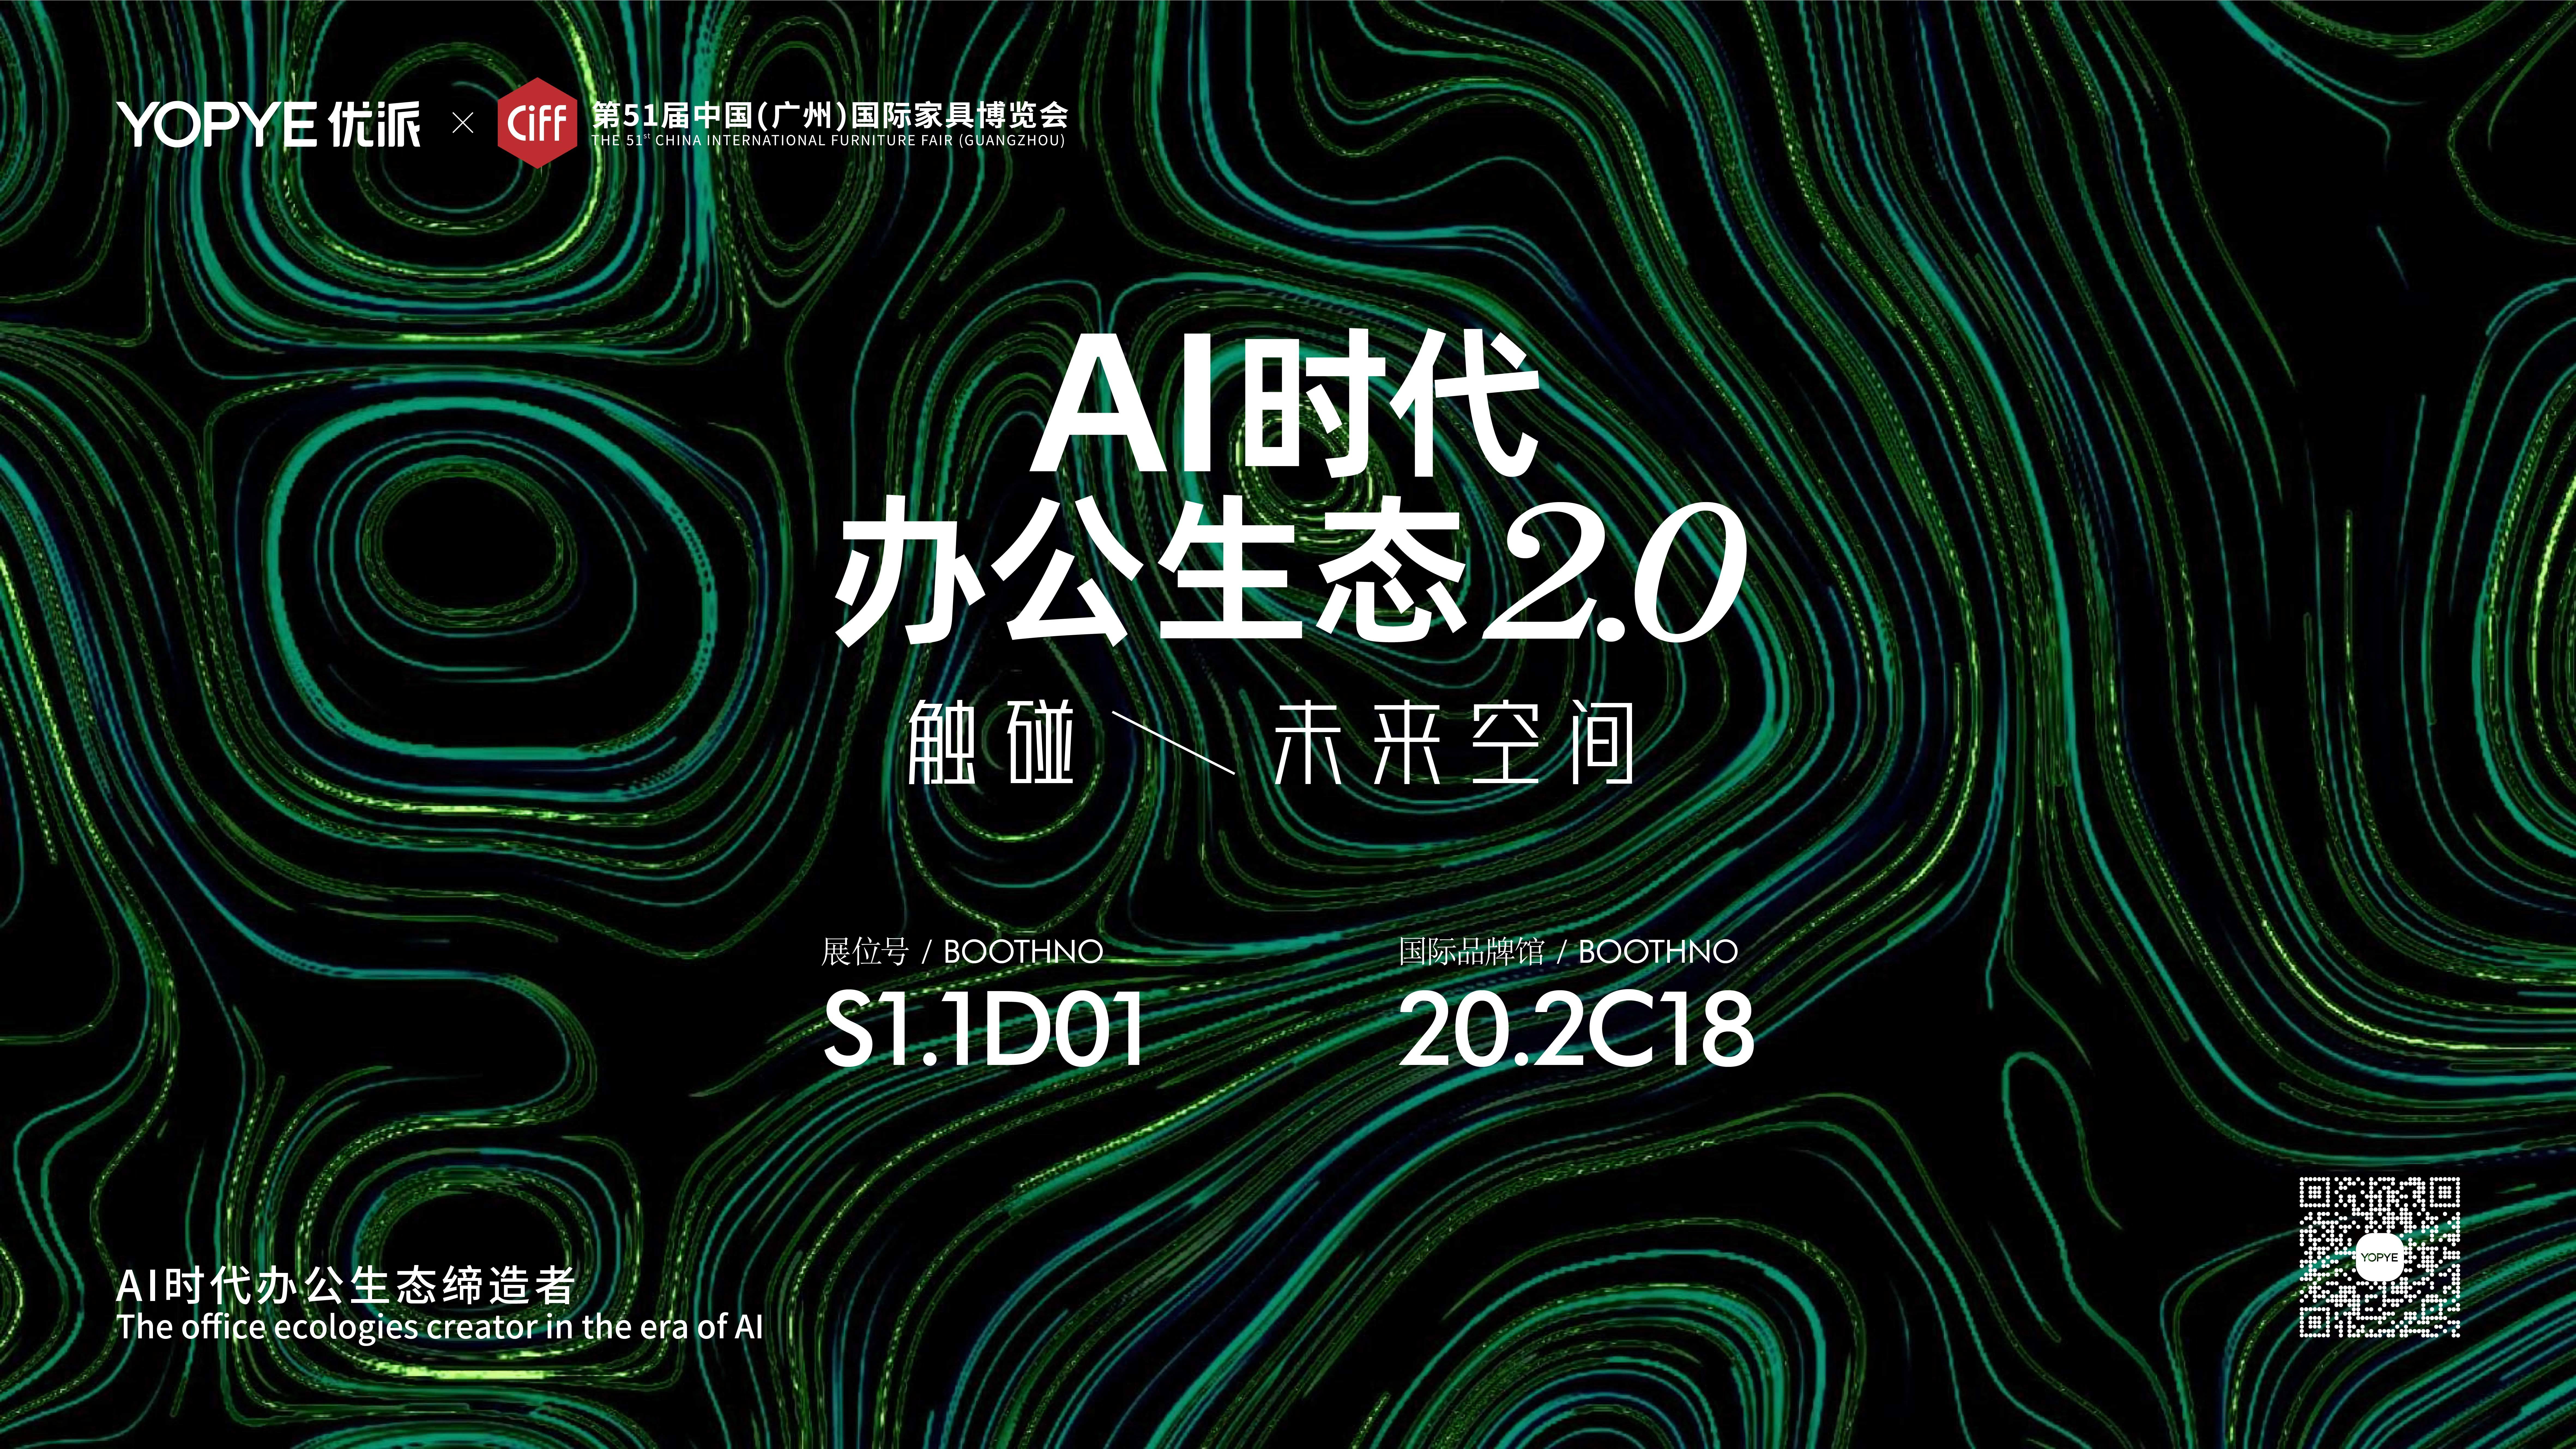 YOPYE9170在线登录金沙 | 展品赏析（四） AI时代办公生态2.0 ——触碰 未来空间 第51届中国（广州）国际家具博览会